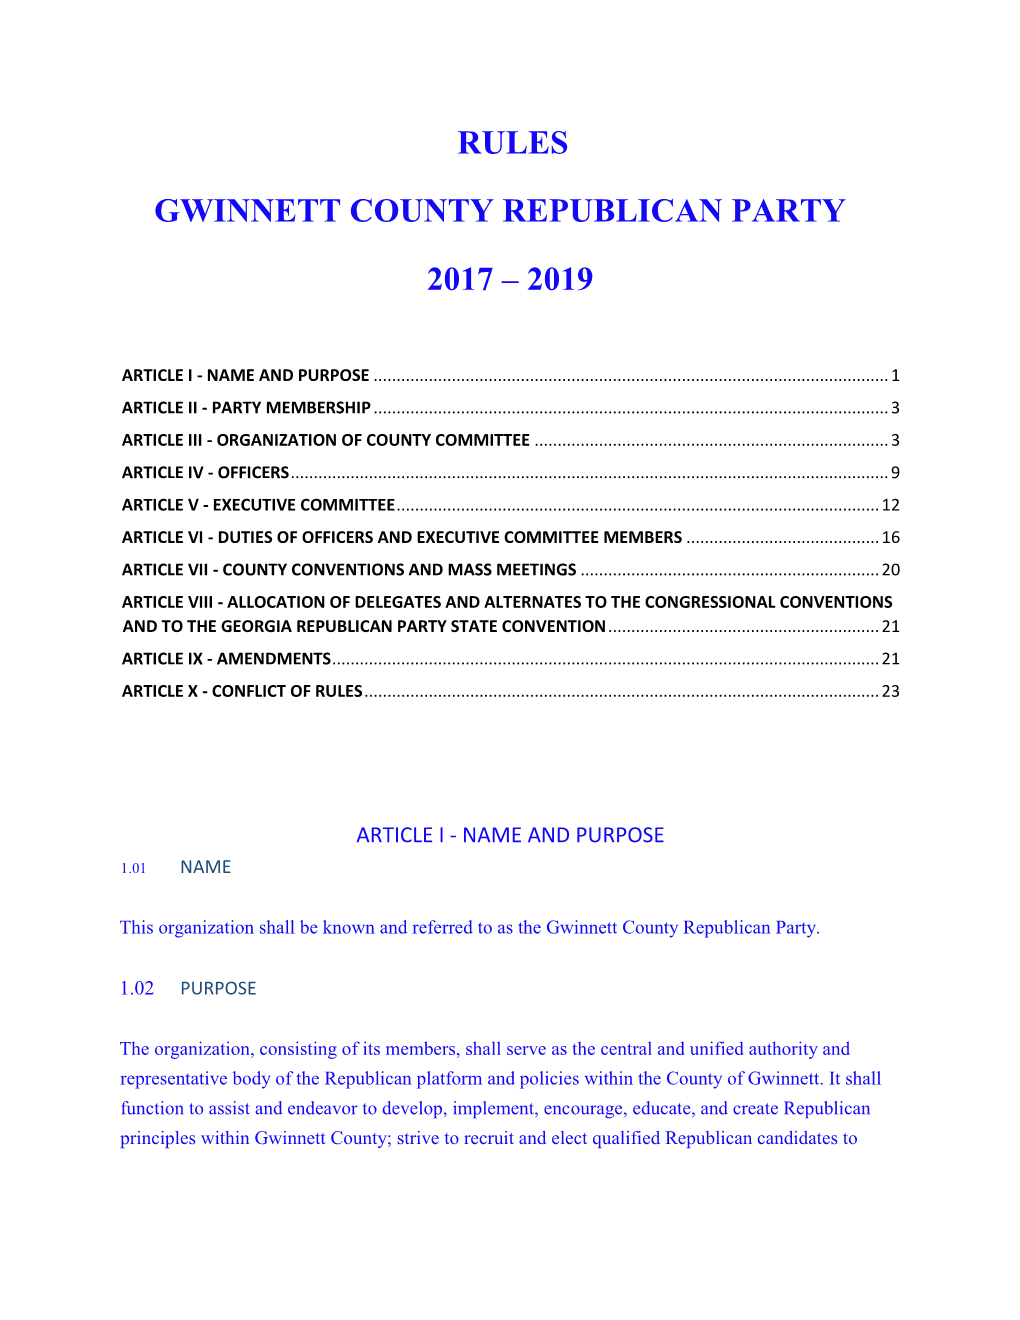 Rules Gwinnett County Republican Party 2017